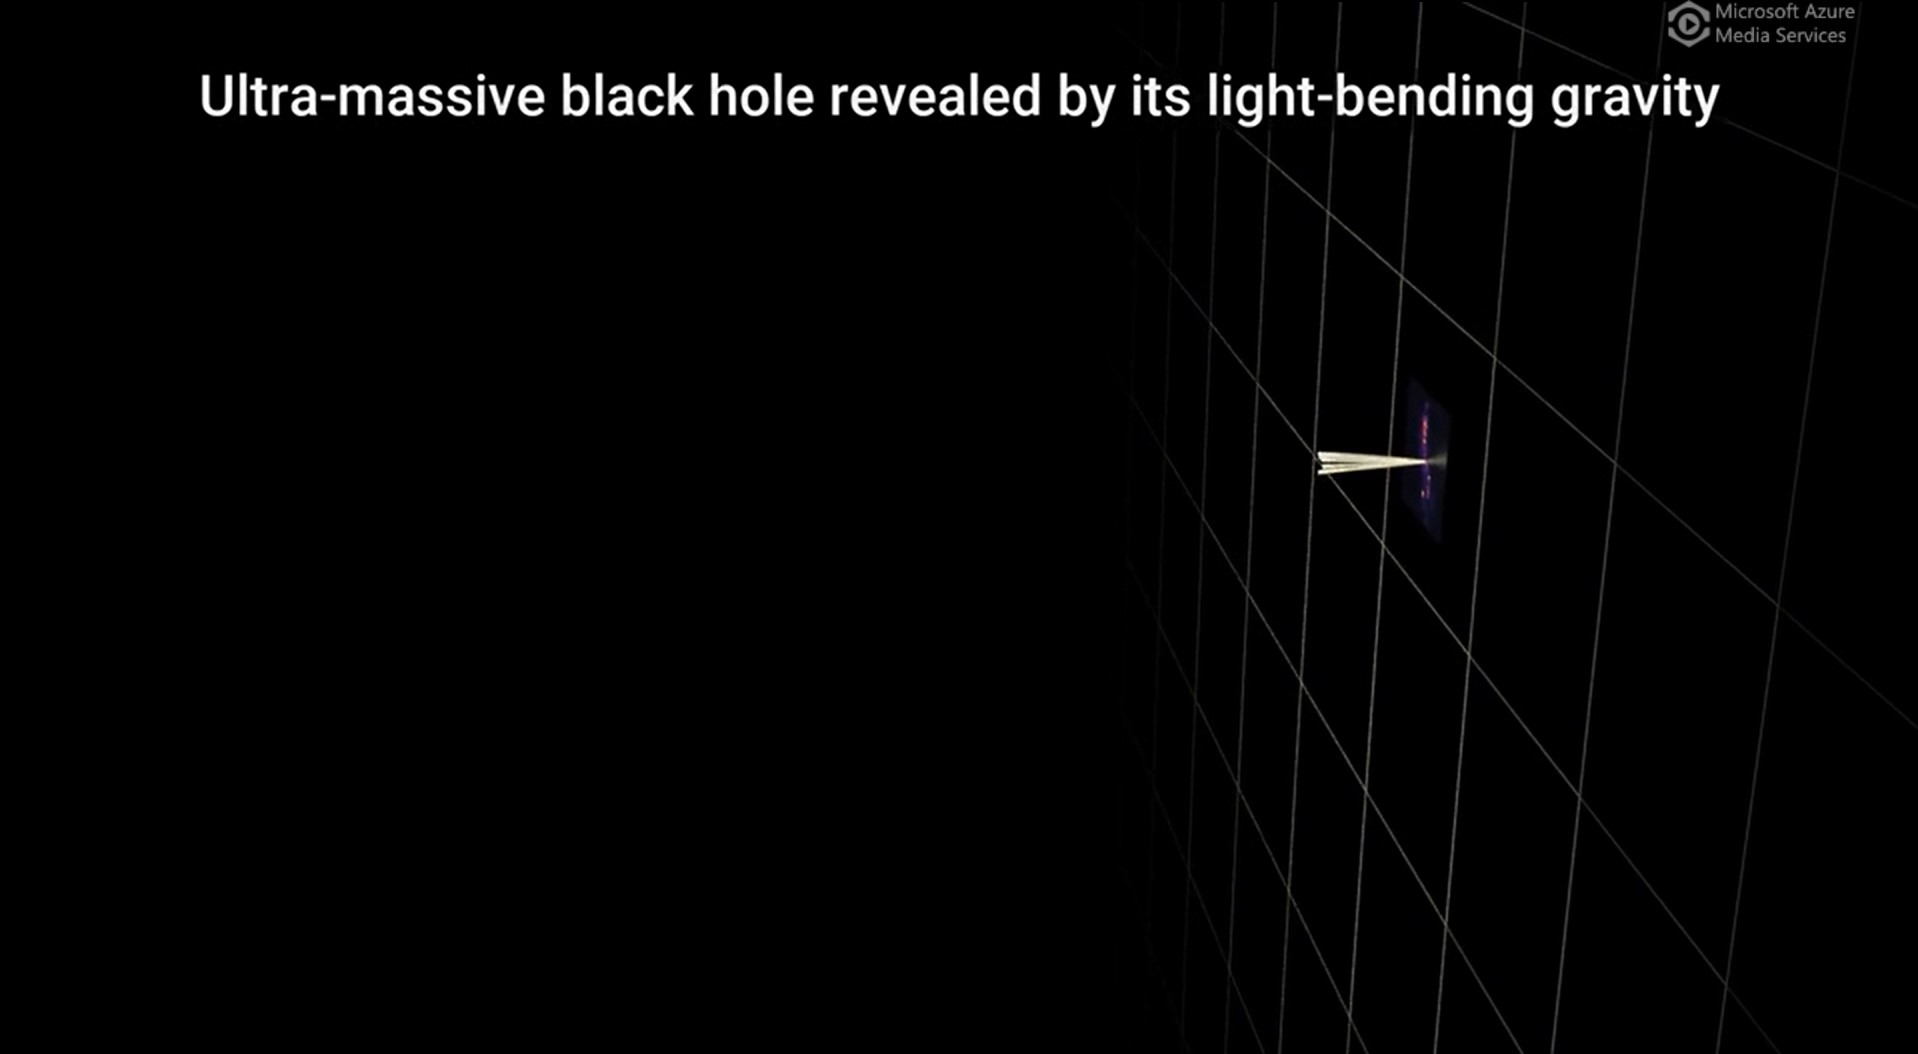 UMBH Gravitational Lensing Video